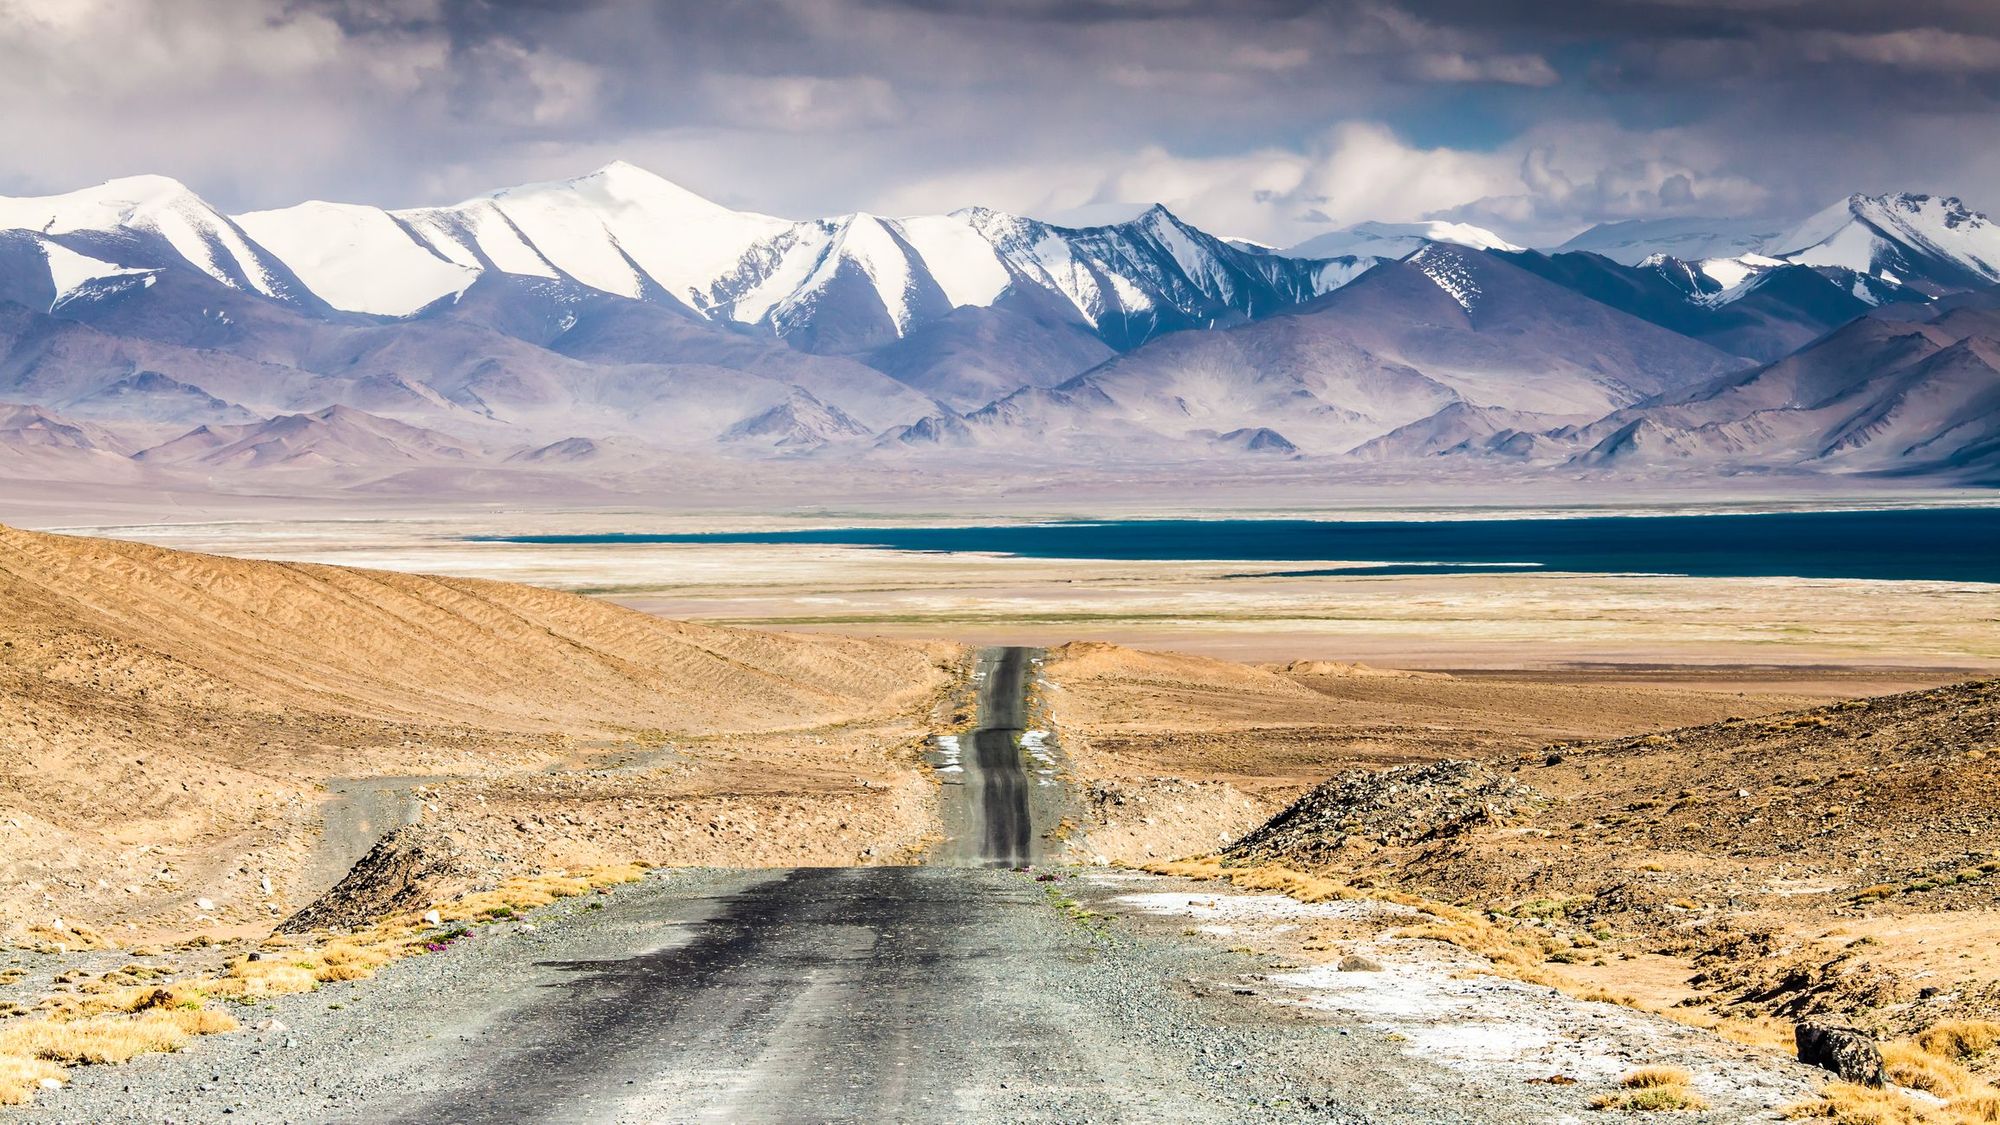 A road leading to Karakul Lake in the Pamir Mountains, Tajikistan.